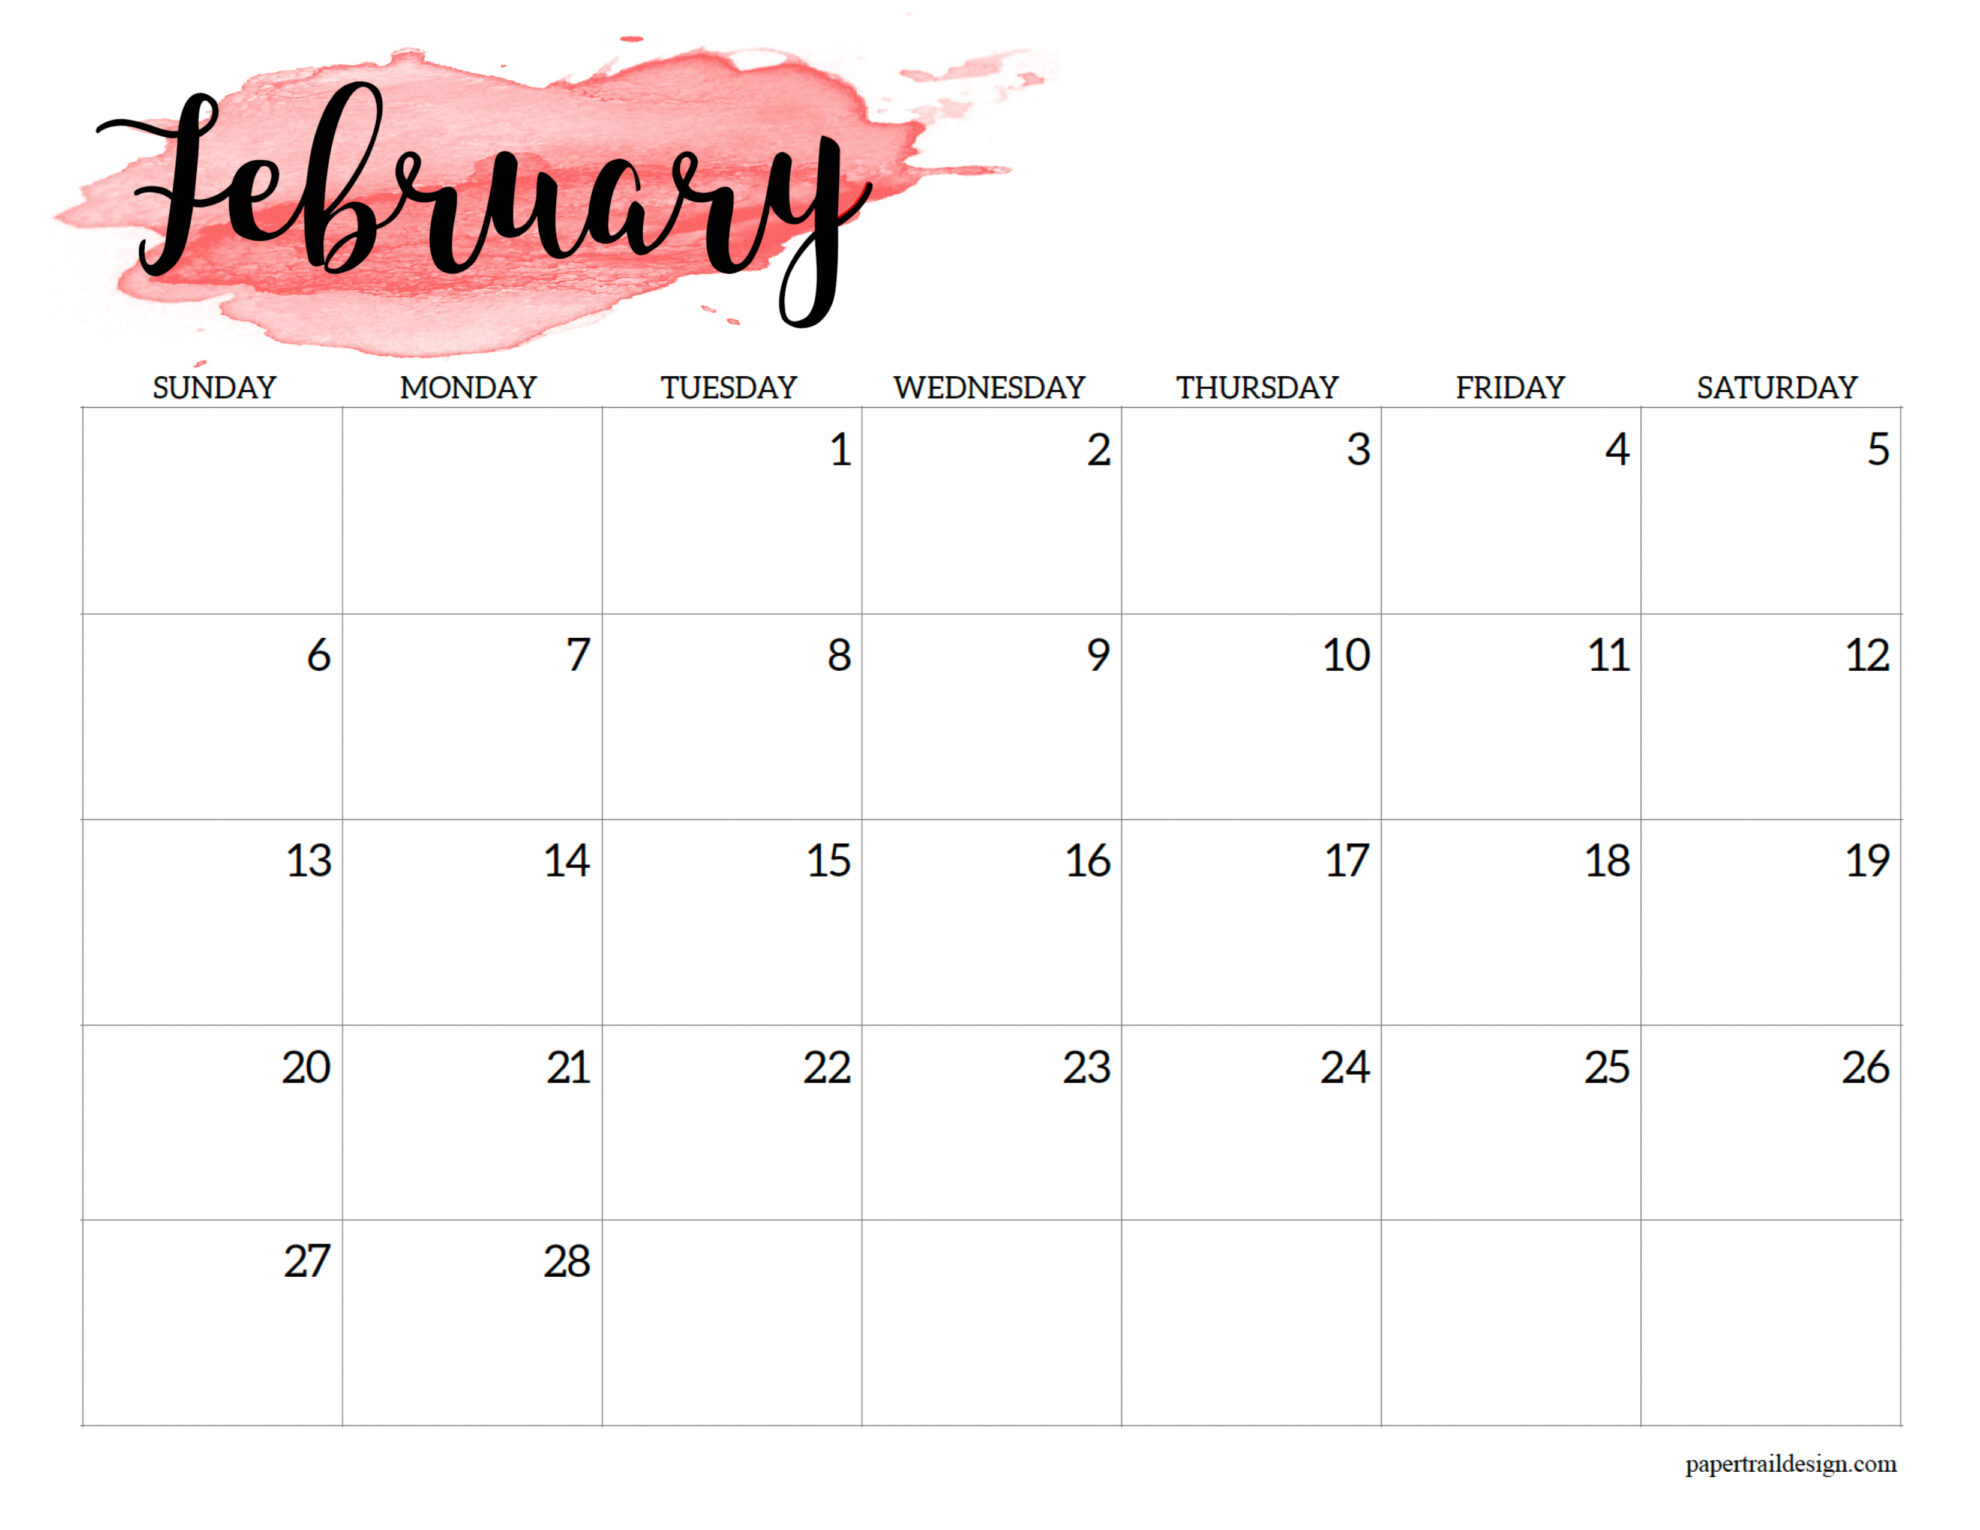 February 2022 Printable Calendar 2022 Calendar Printable - Watercolor - Paper Trail Design